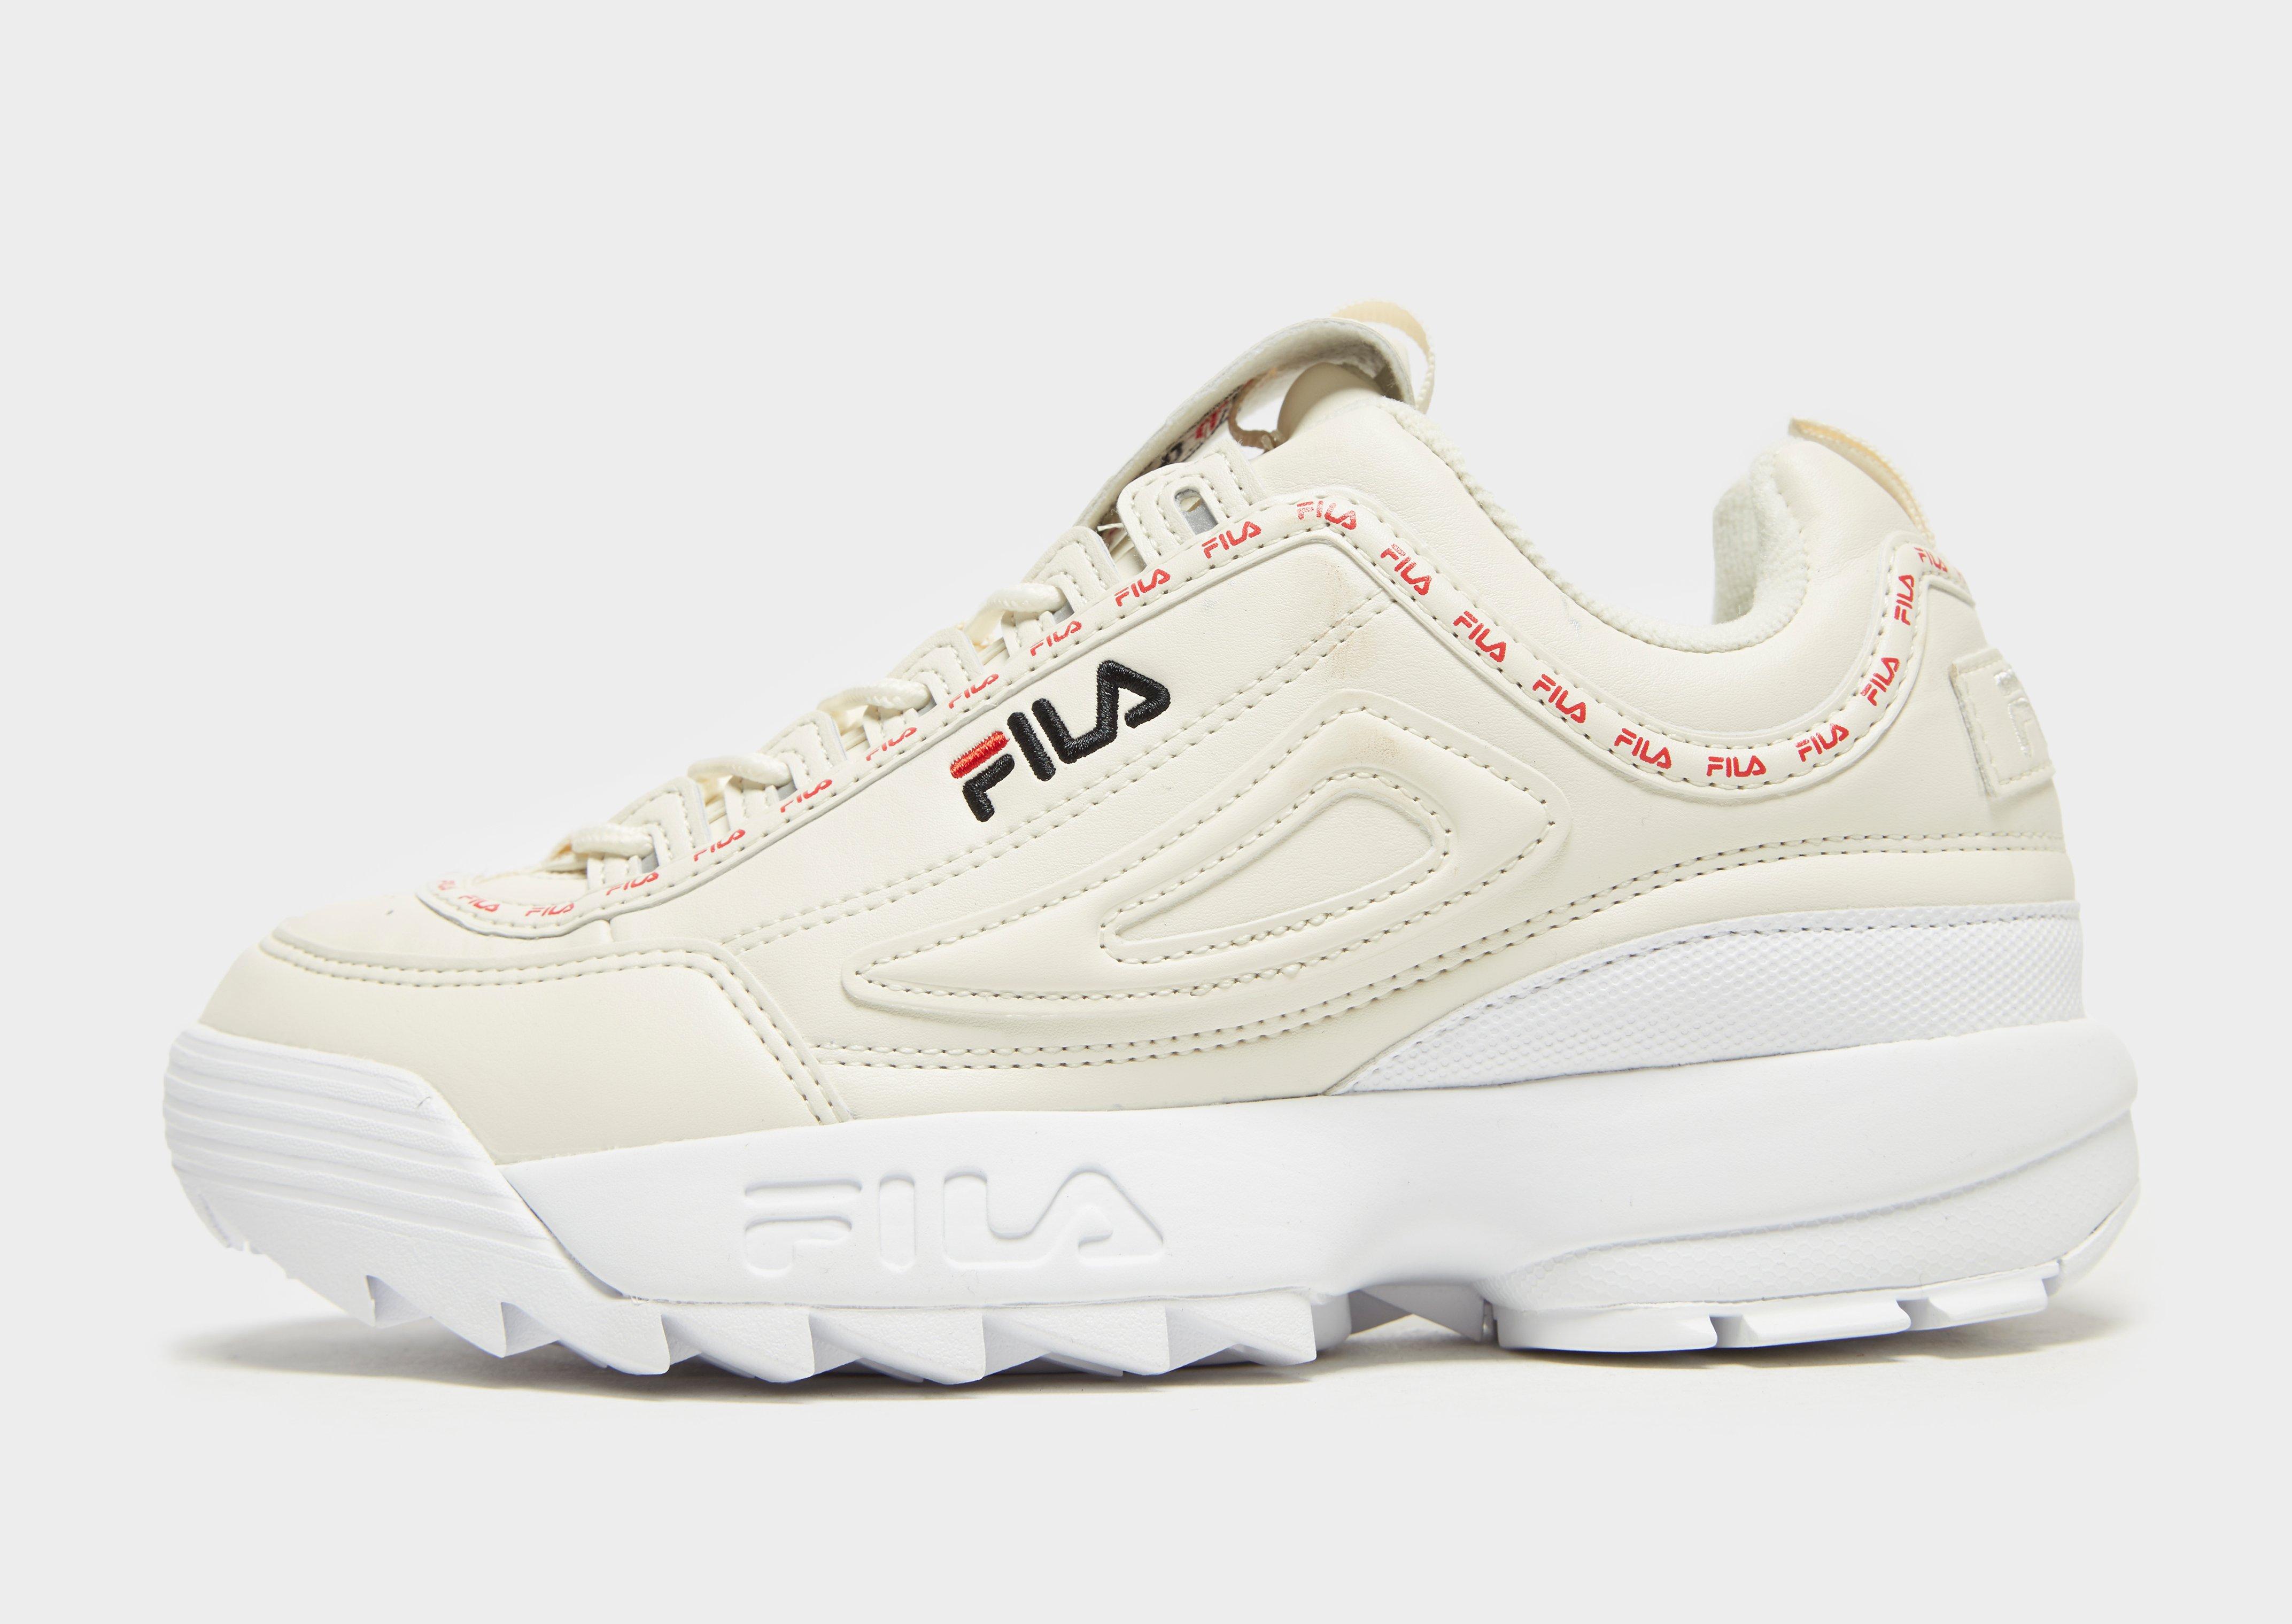 New Fila Women’s Disruptor II Repeat Sneakers Cream | eBay